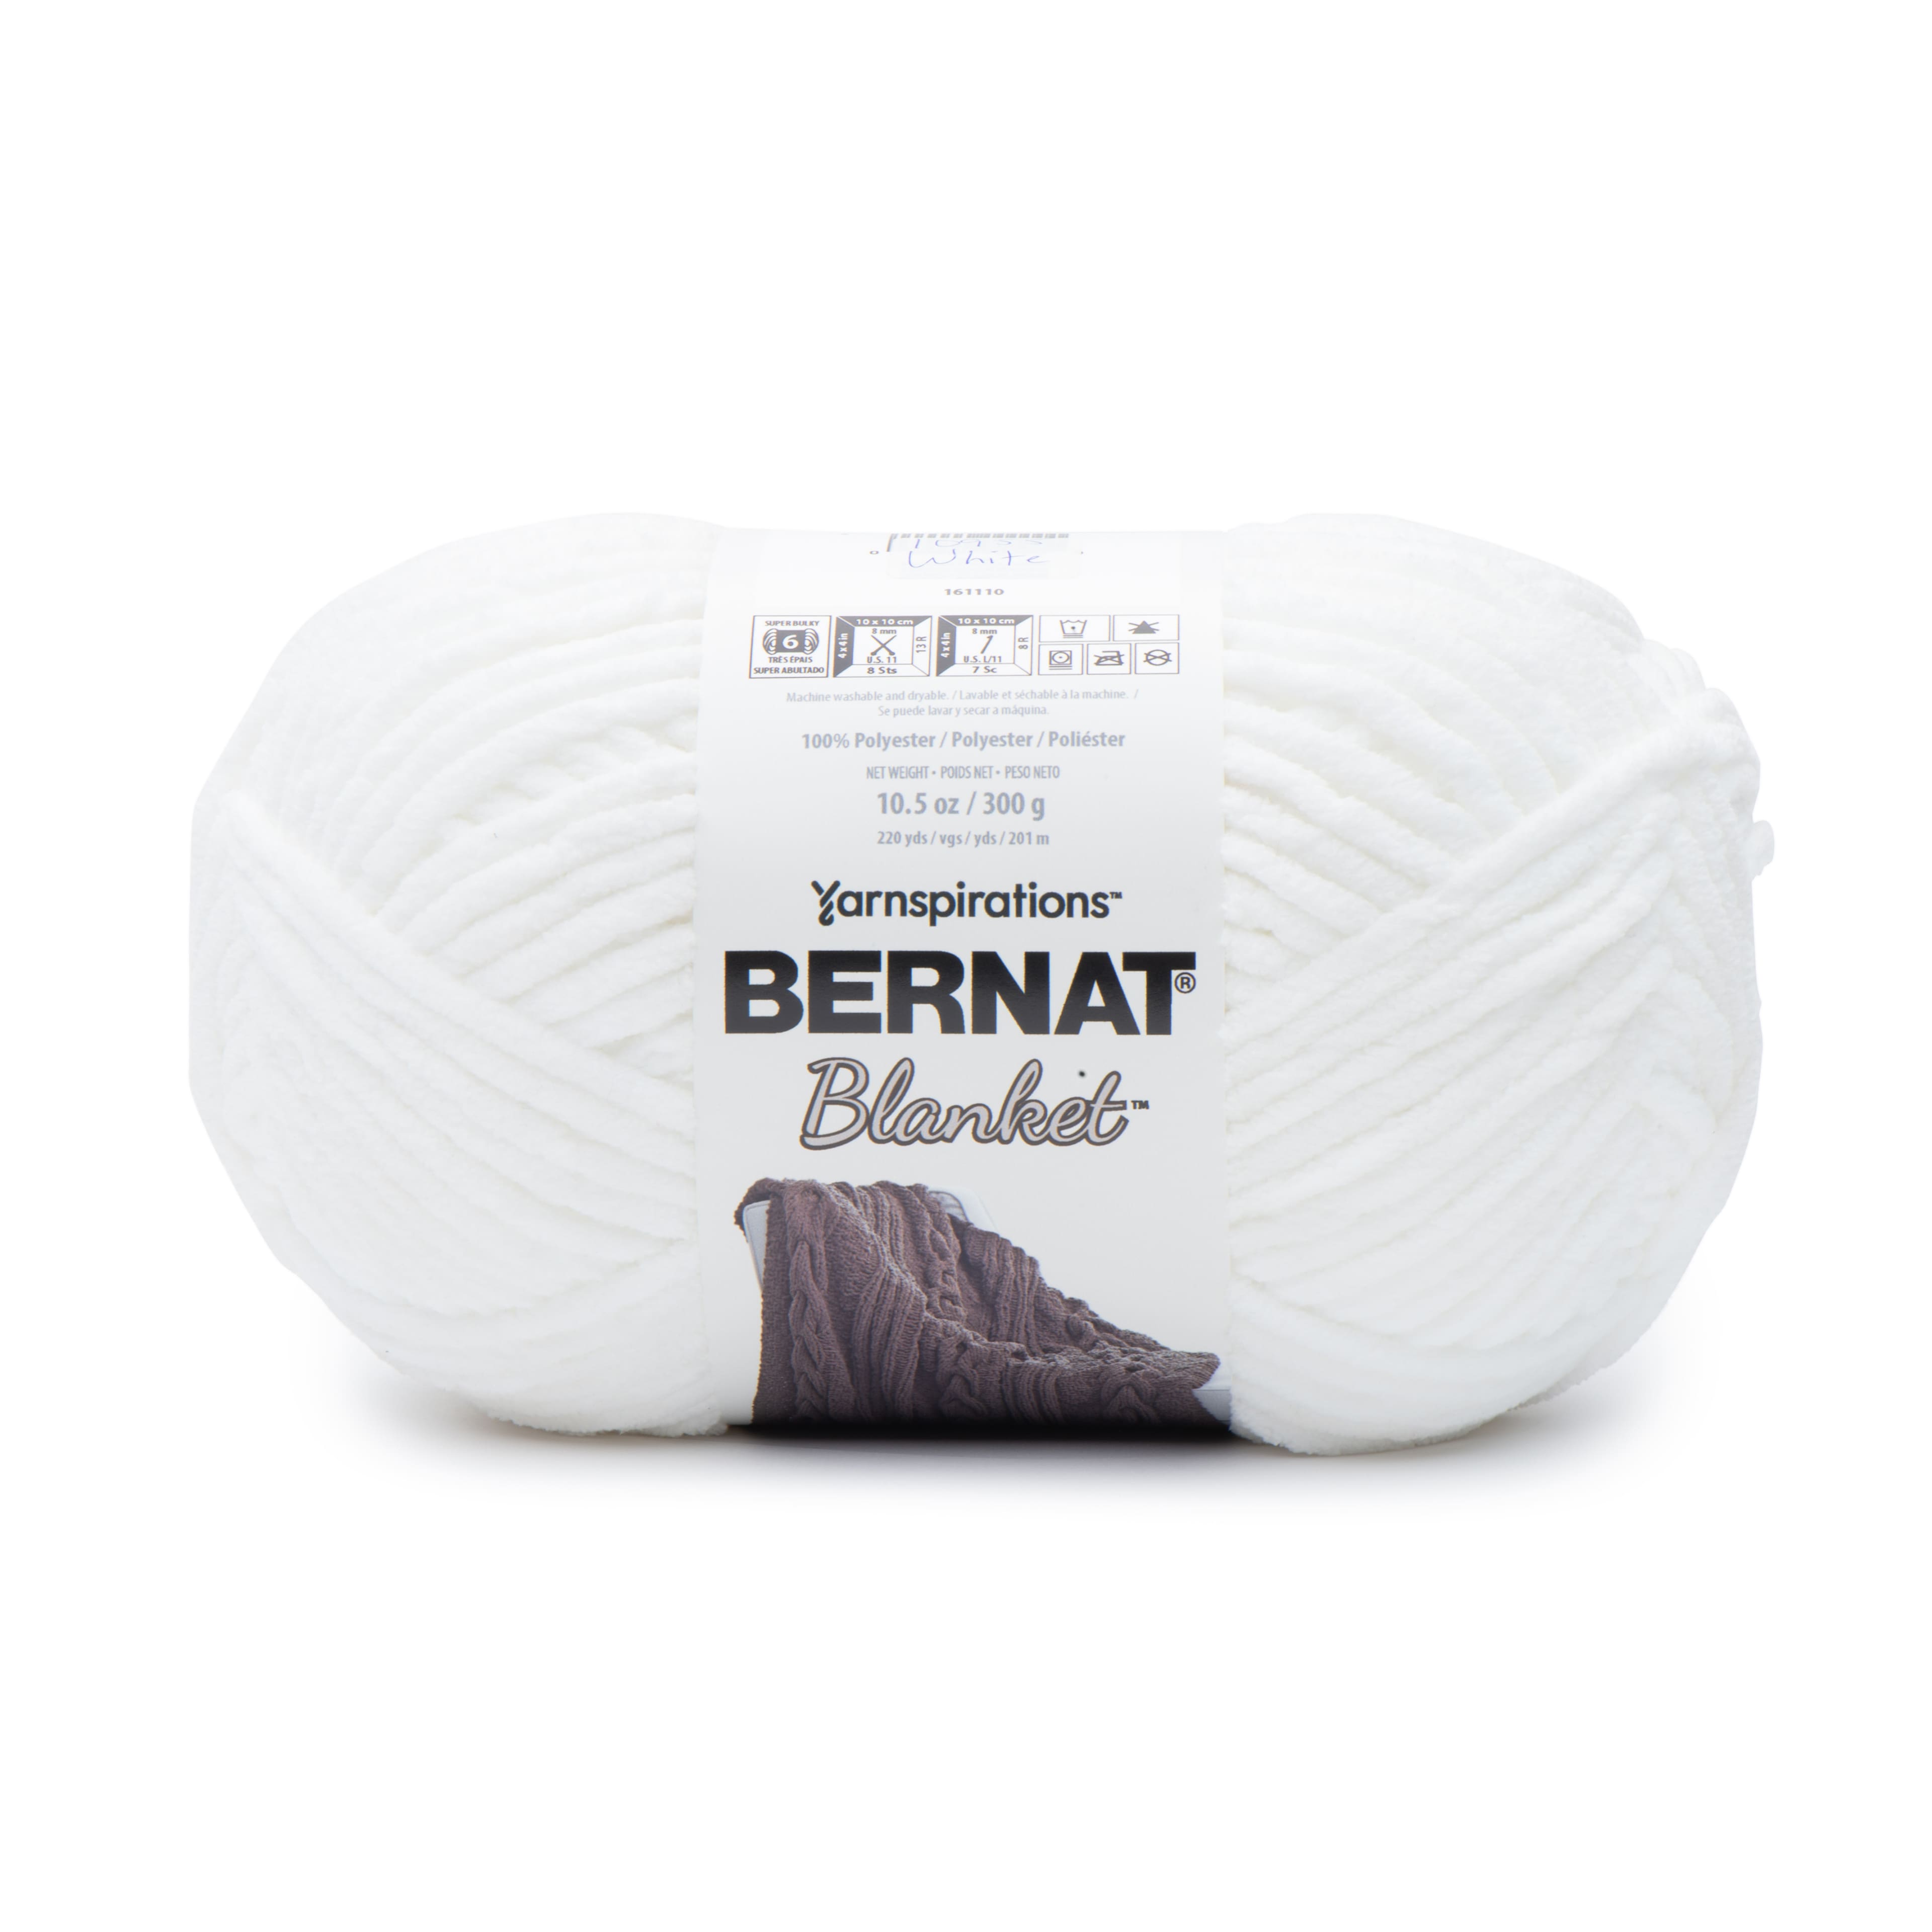 MISTY JUNGLE GREEN Bernat Baby Blanket Yarn 10.5oz/300g, 220 Yards/201m,  Super Bulky 6 